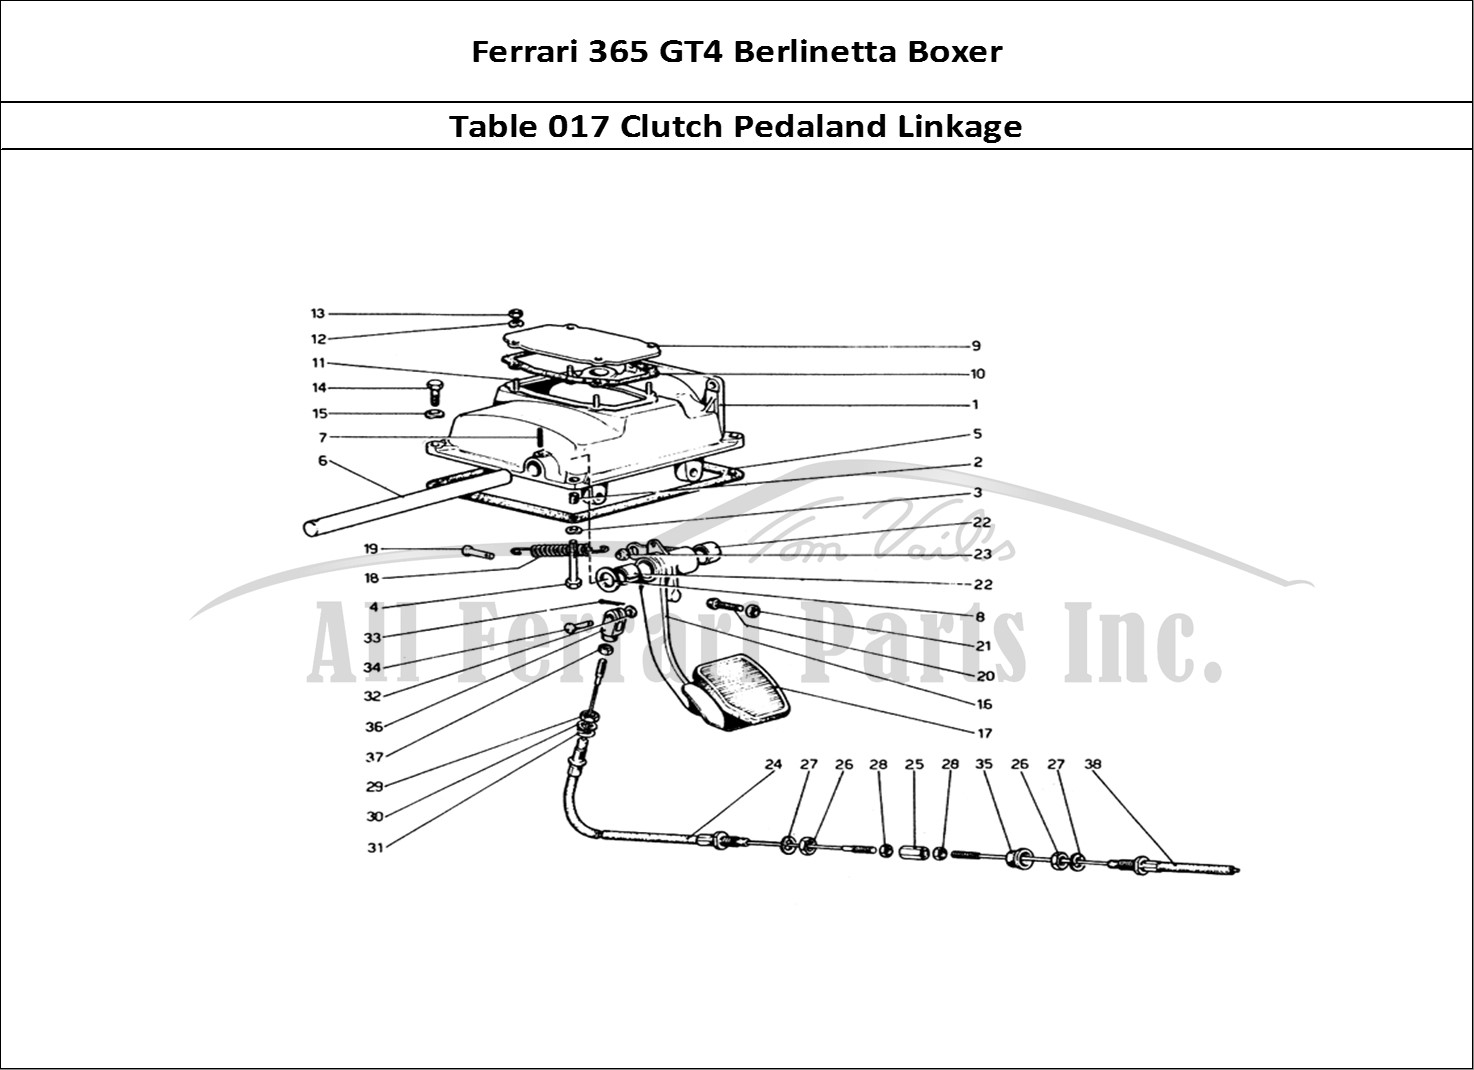 Ferrari Parts Ferrari 365 GT4 Berlinetta Boxer Page 017 Clutch Release Control